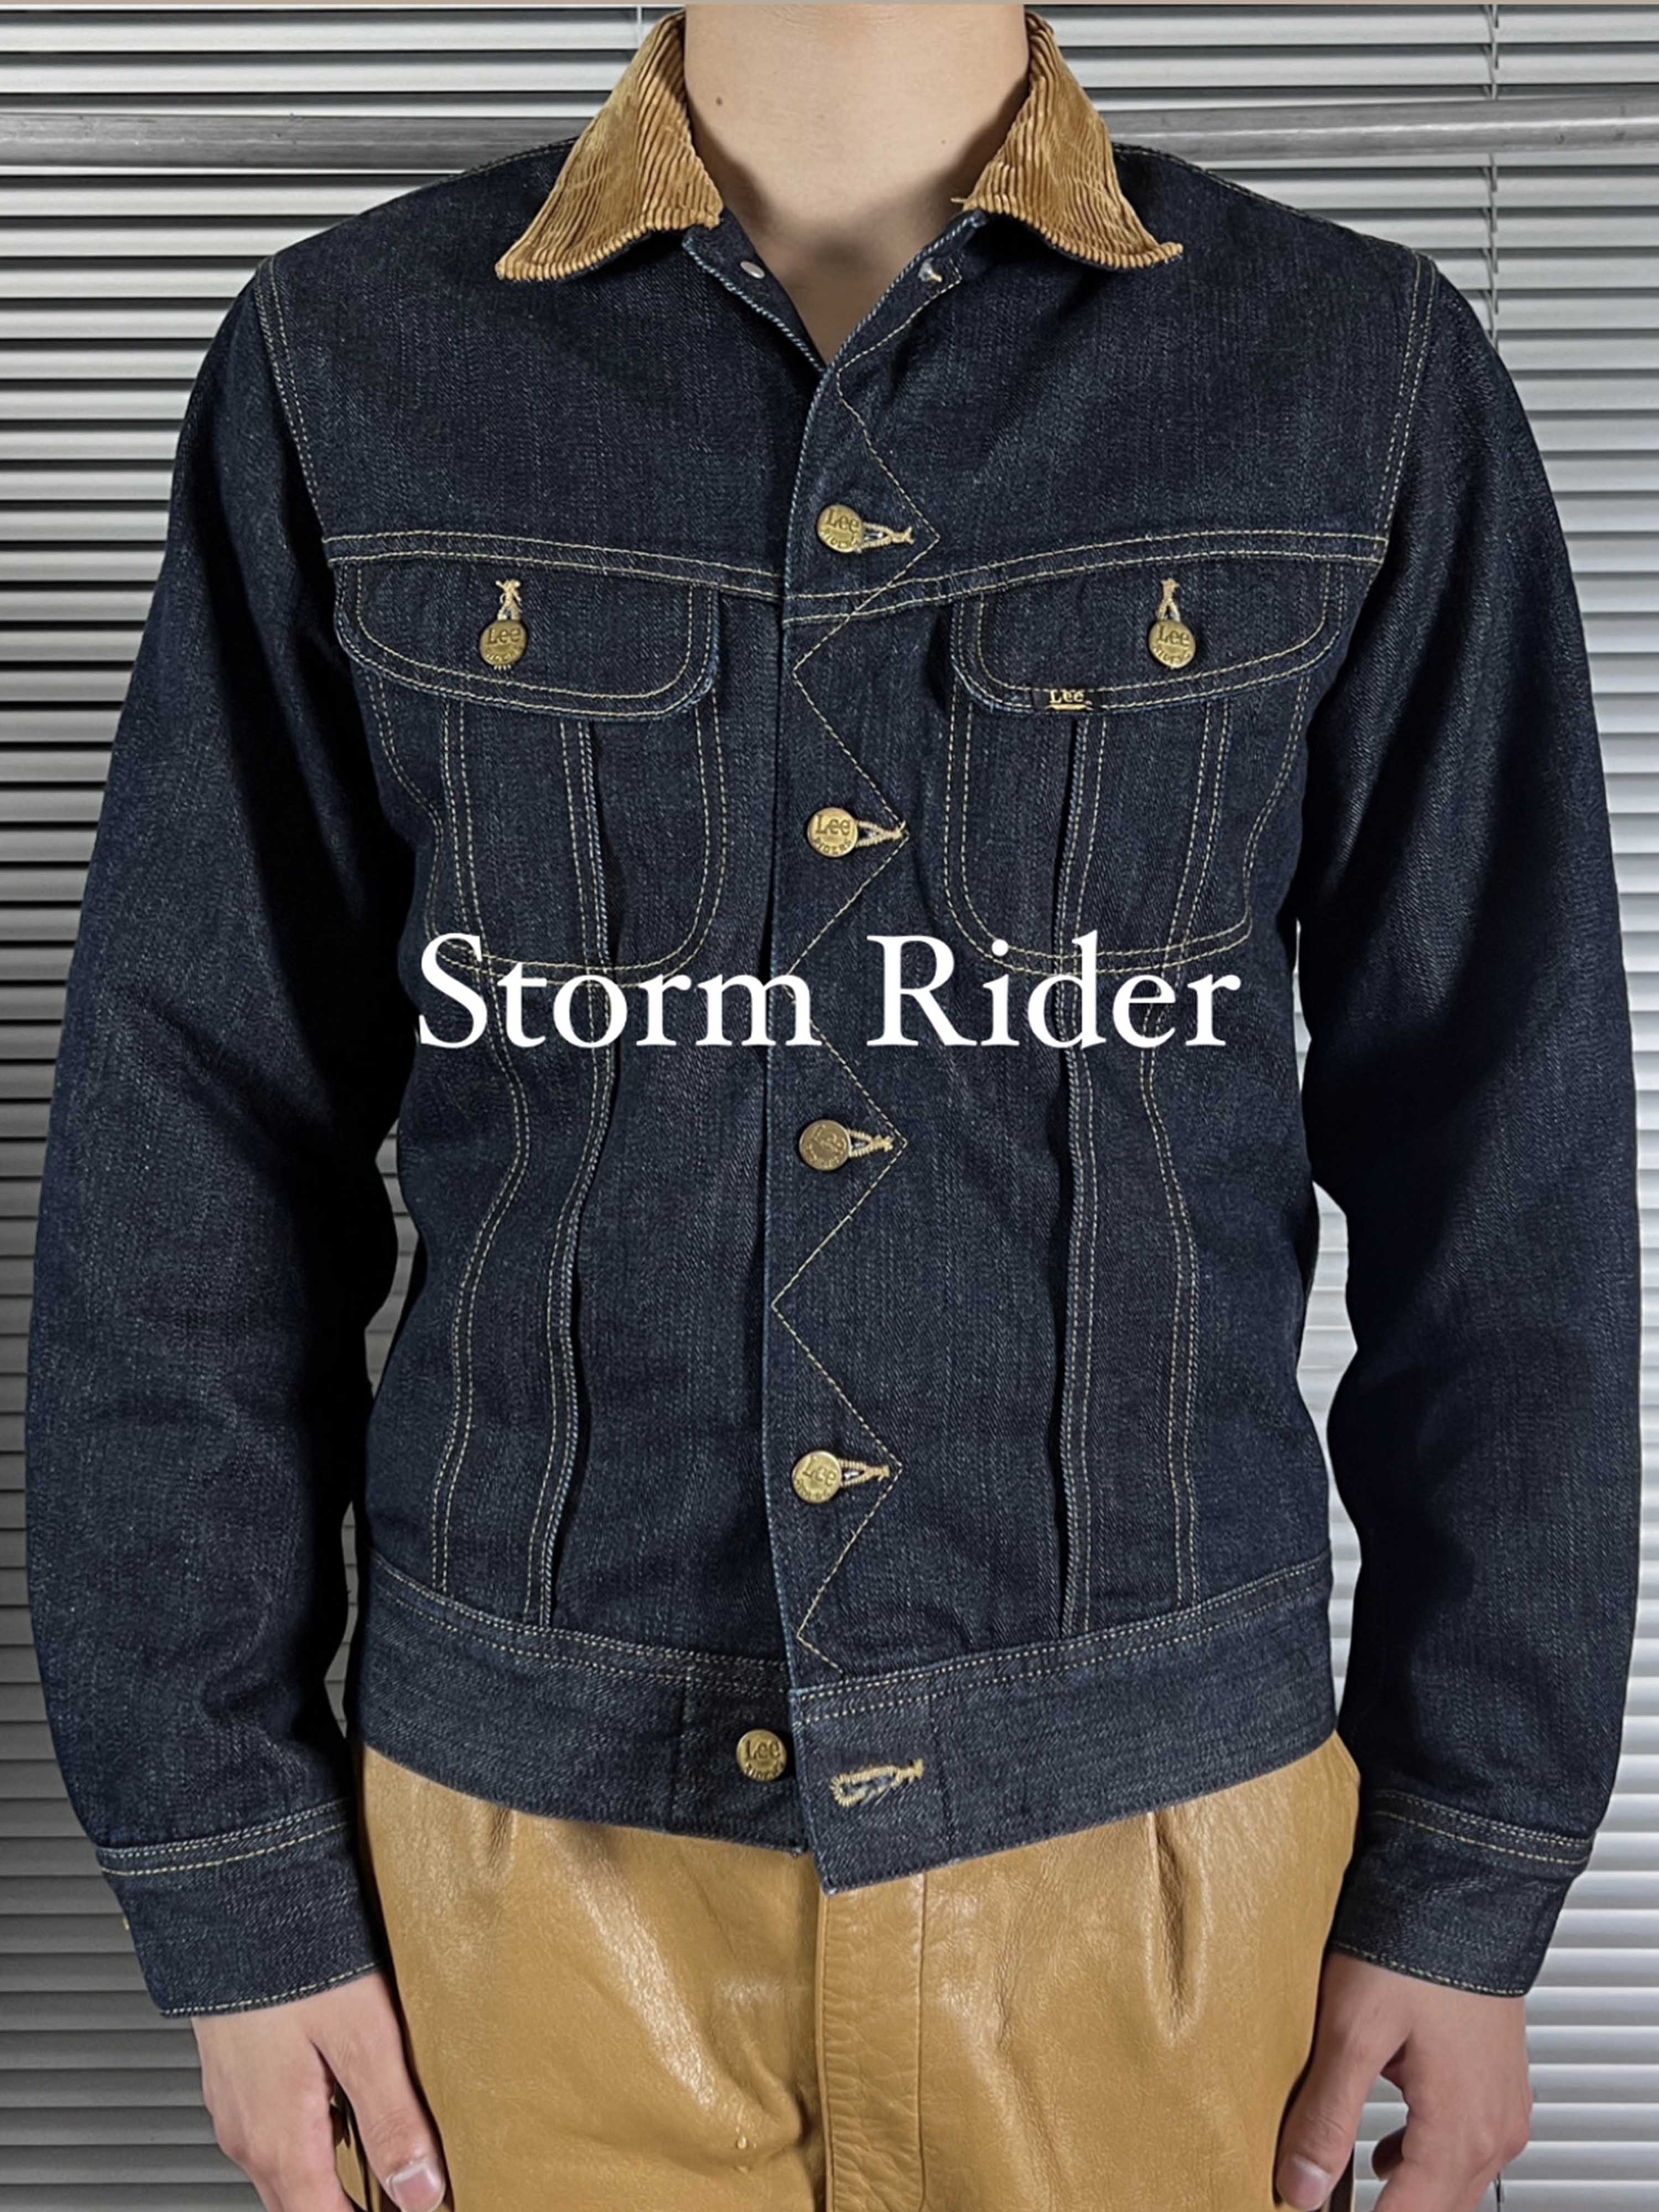 Lee Strom Riders jacket